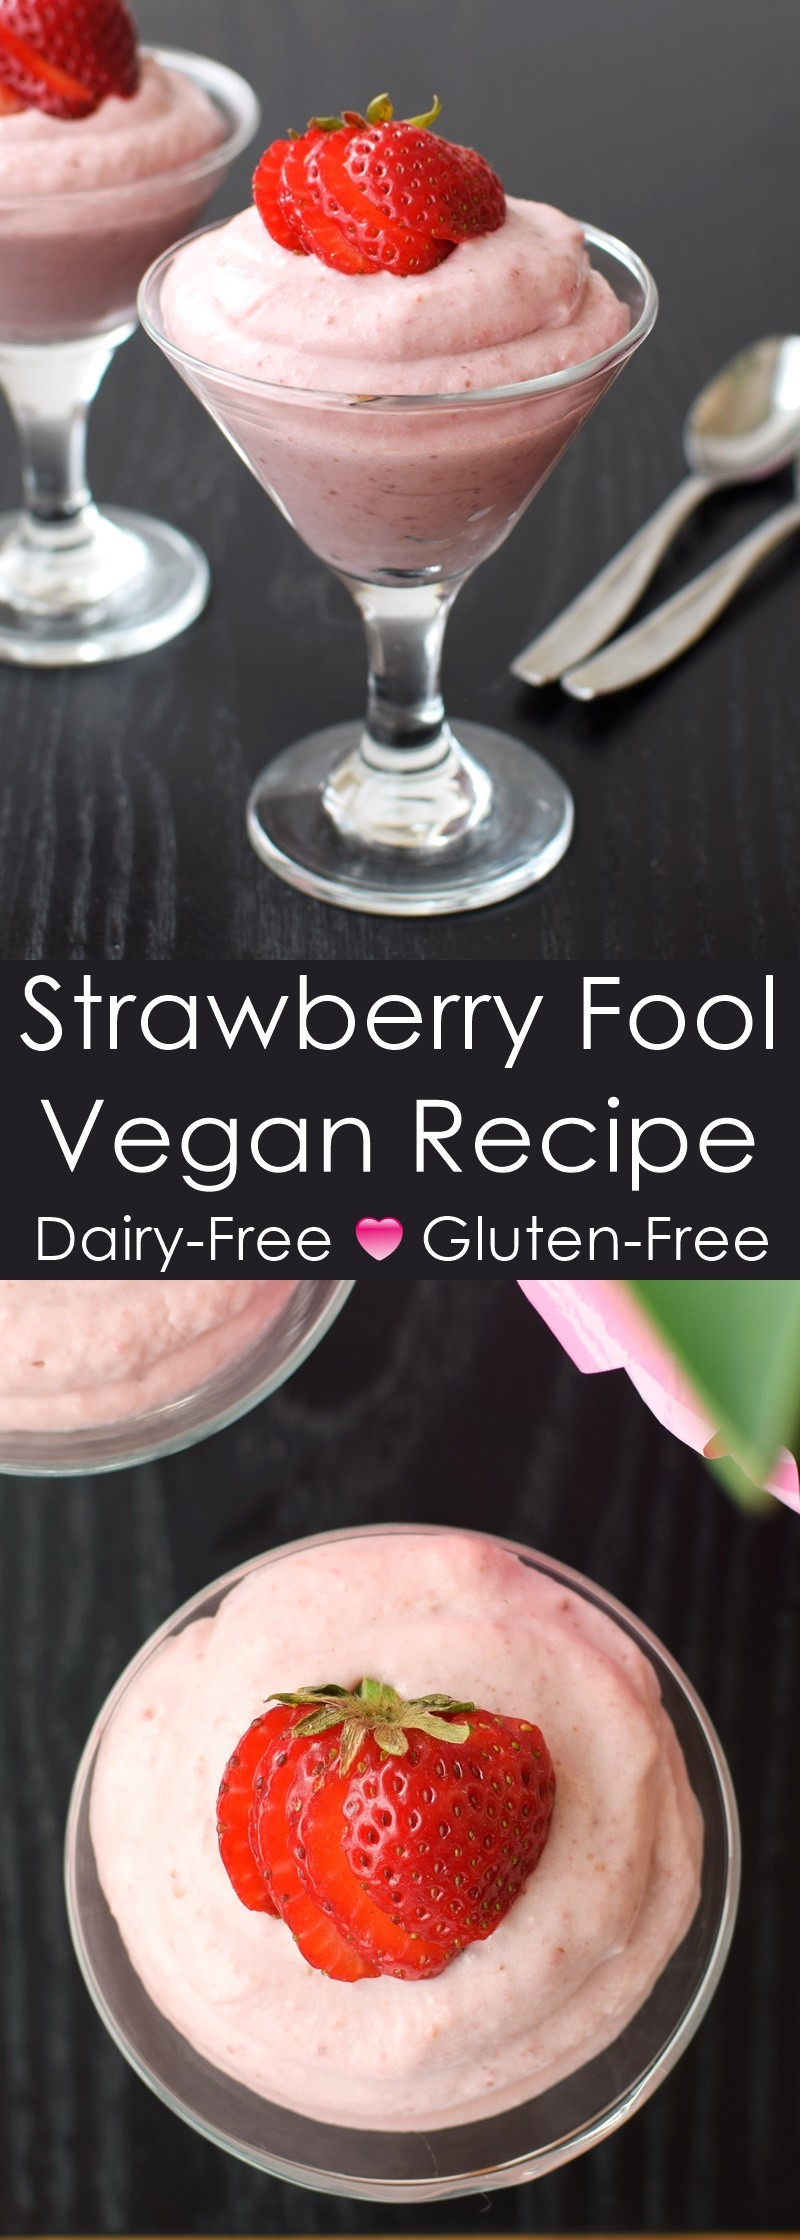 Vegan Dairy Free Recipes
 Vegan Strawberry Fool Dessert Recipe Go Dairy Free